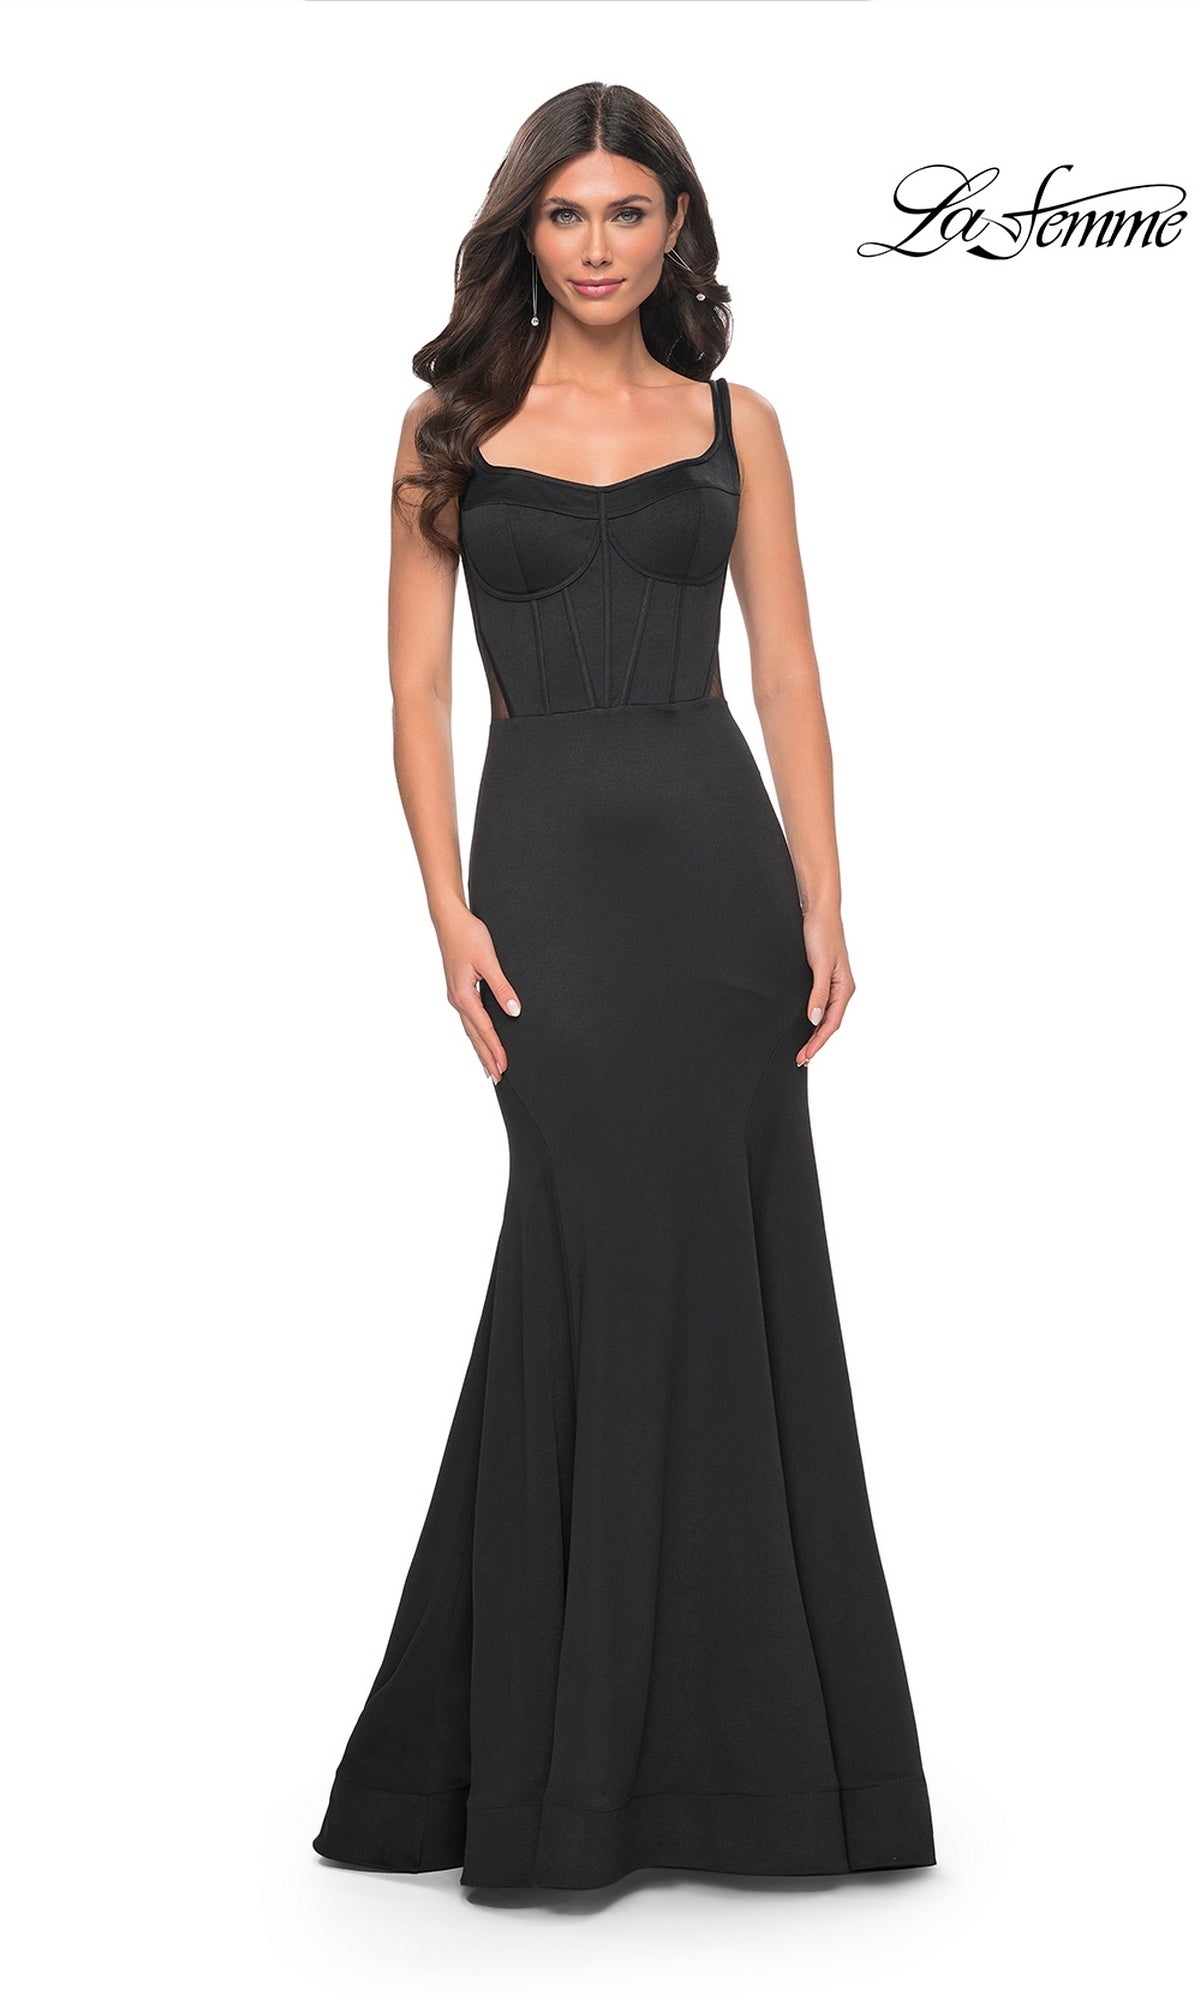  La Femme 32268 Formal Prom Dress